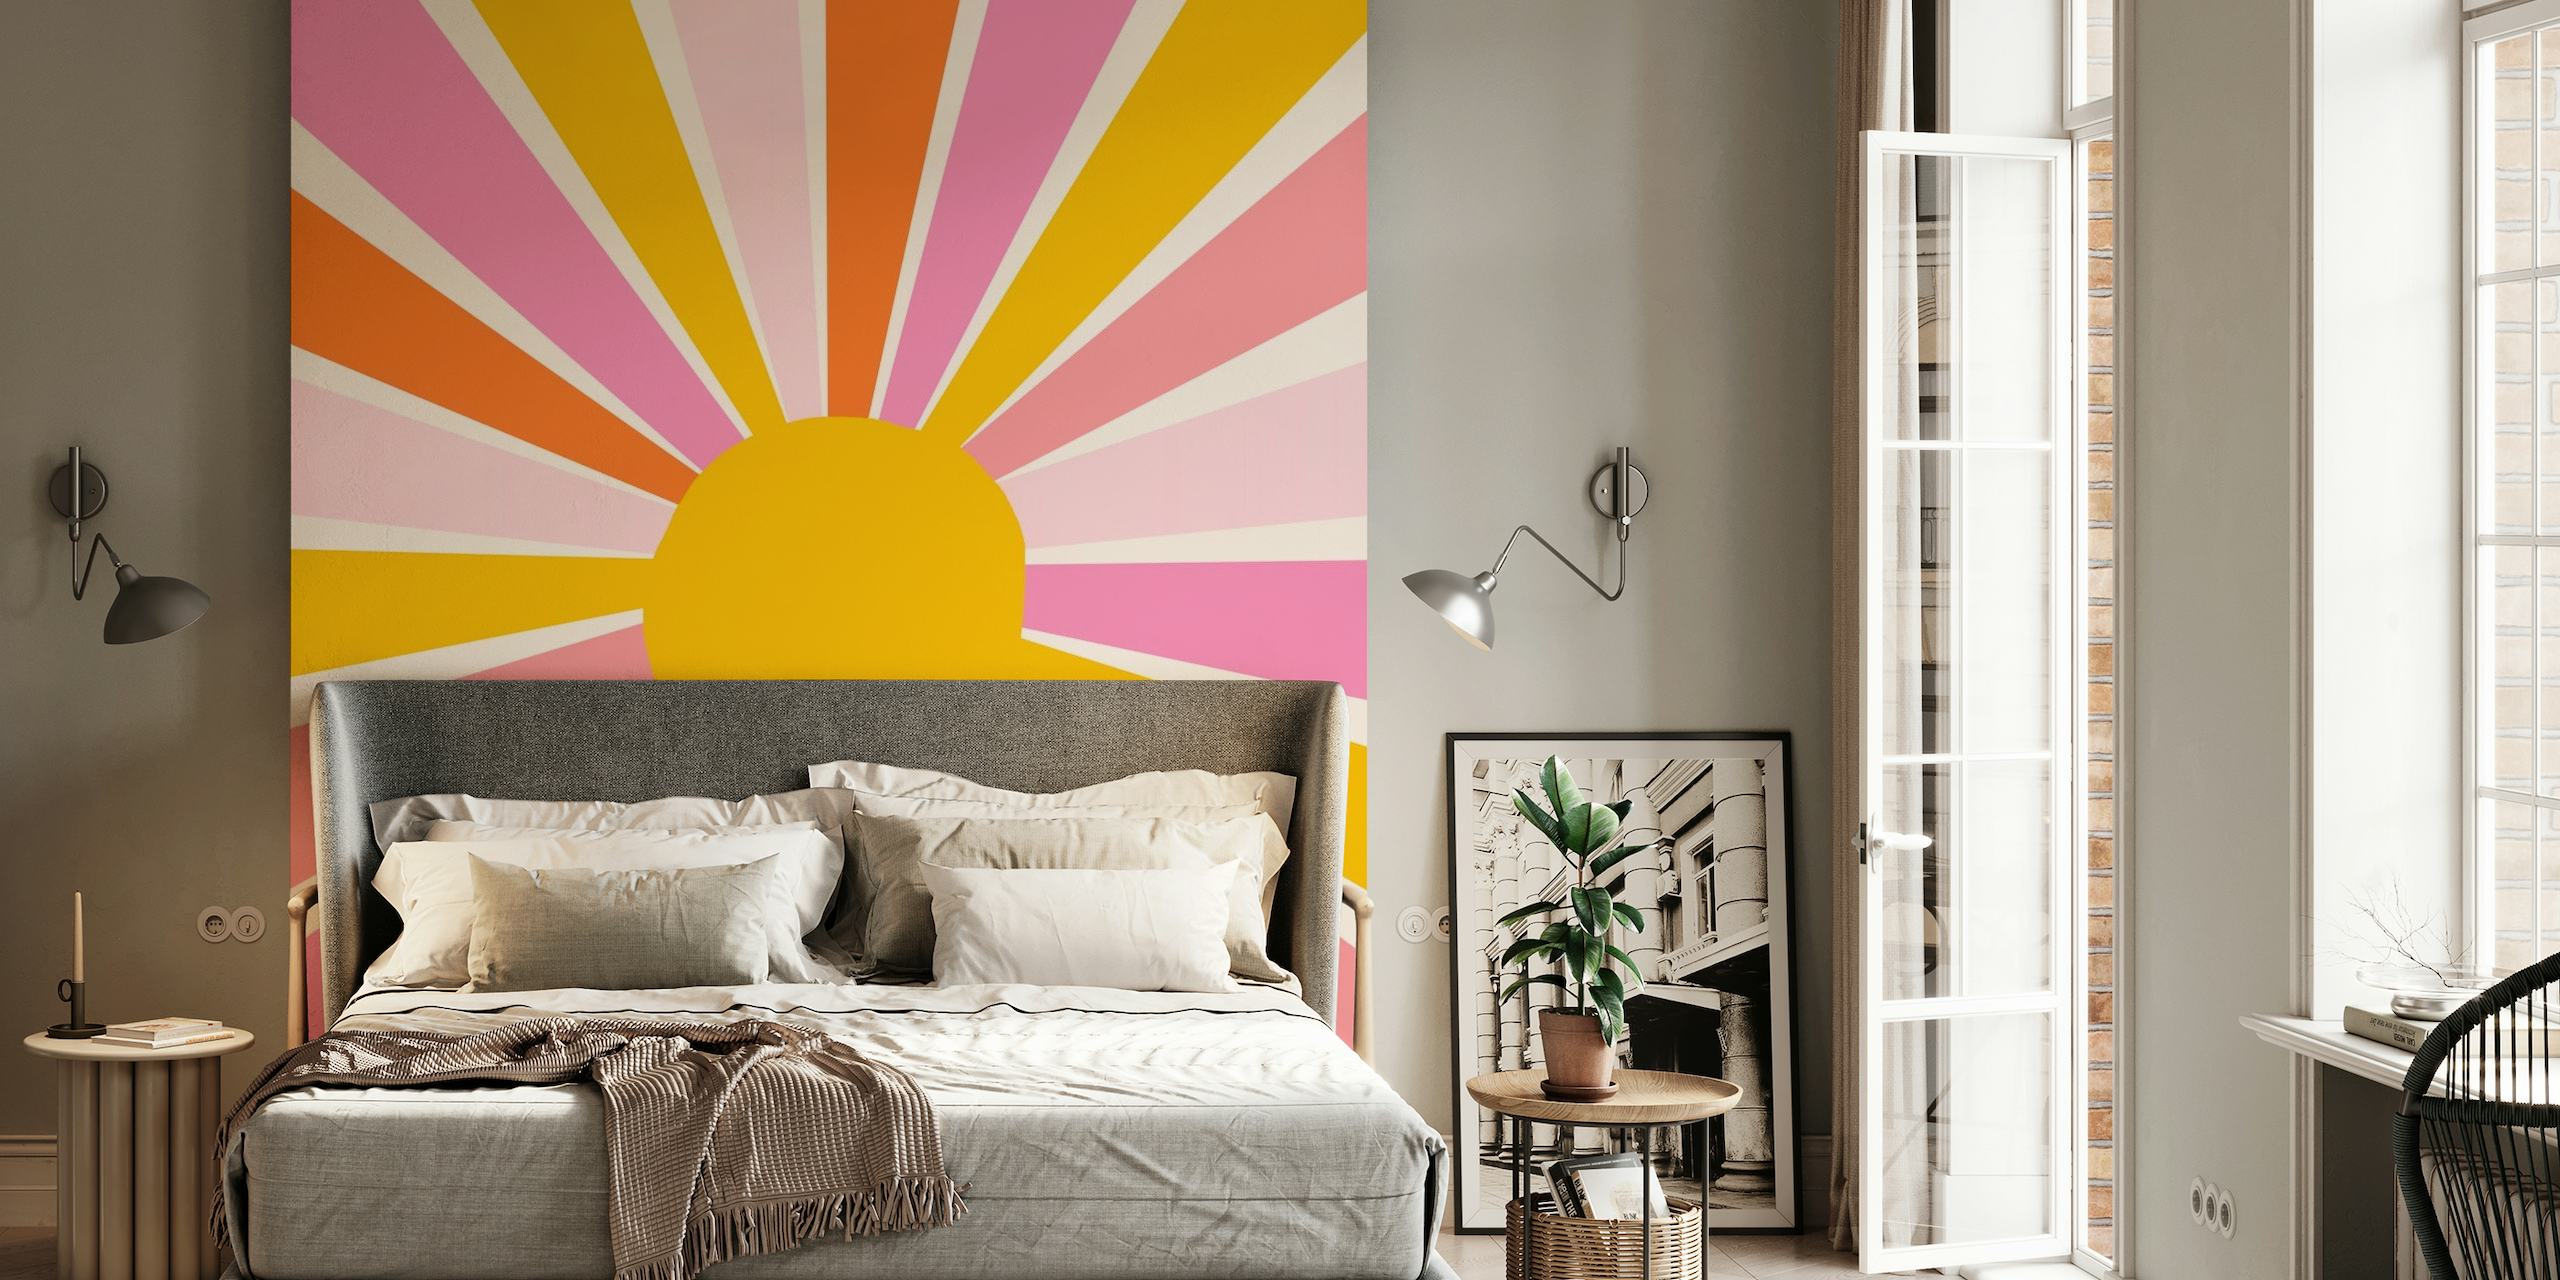 Sunshiny day - bright wallpaper